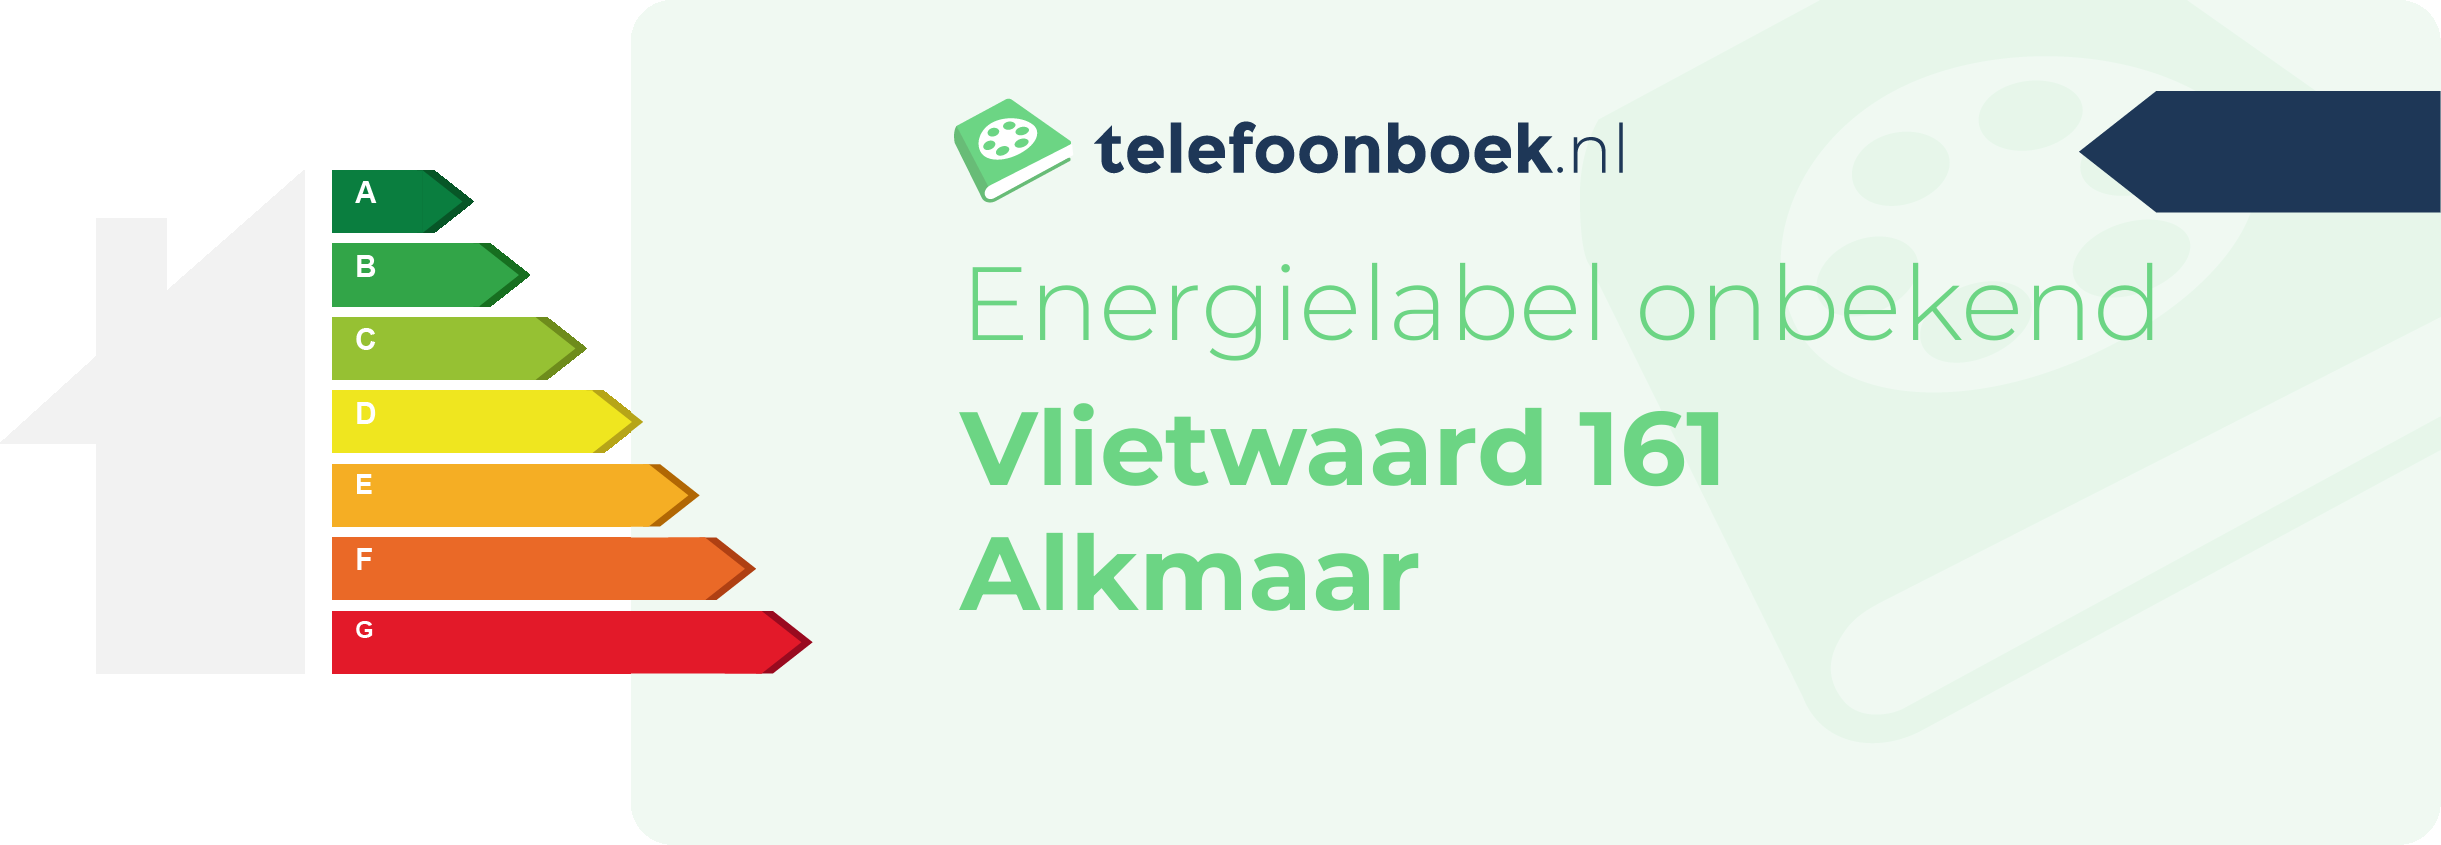 Energielabel Vlietwaard 161 Alkmaar